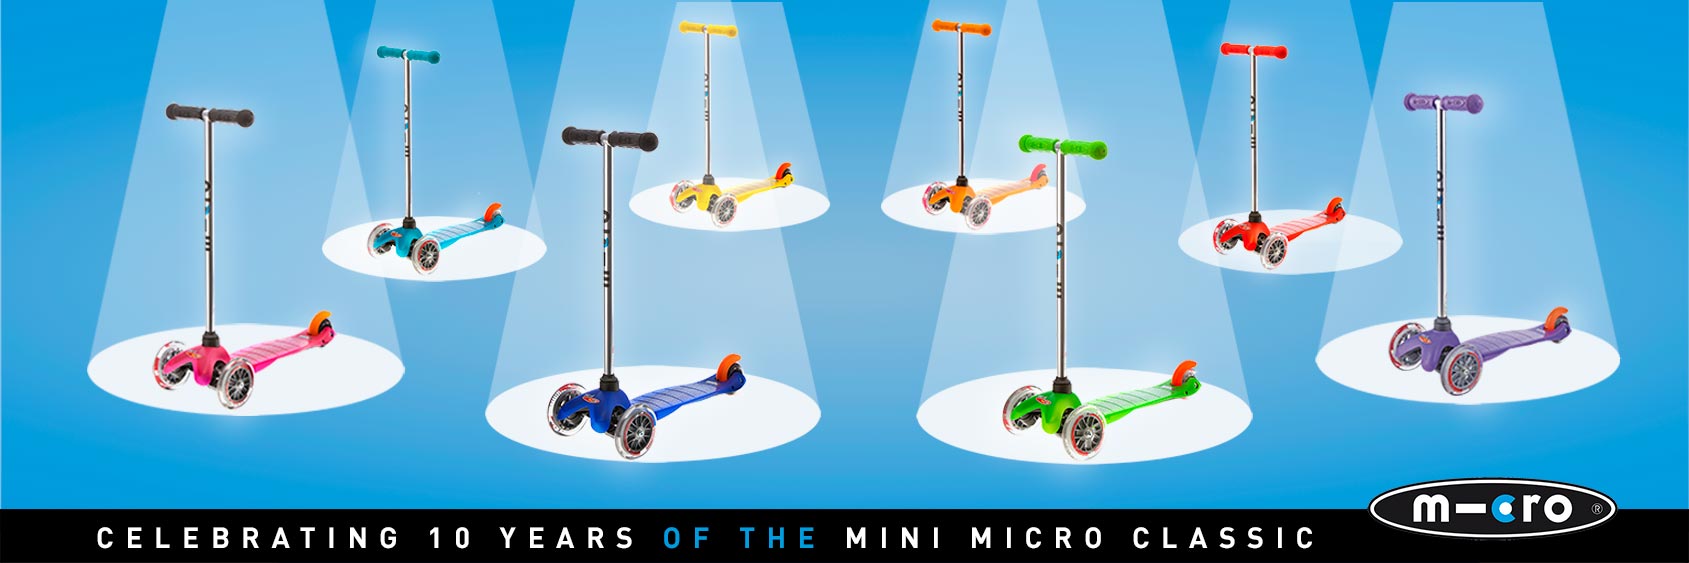 Celebrating 10 years of the Mini Micro Classic 